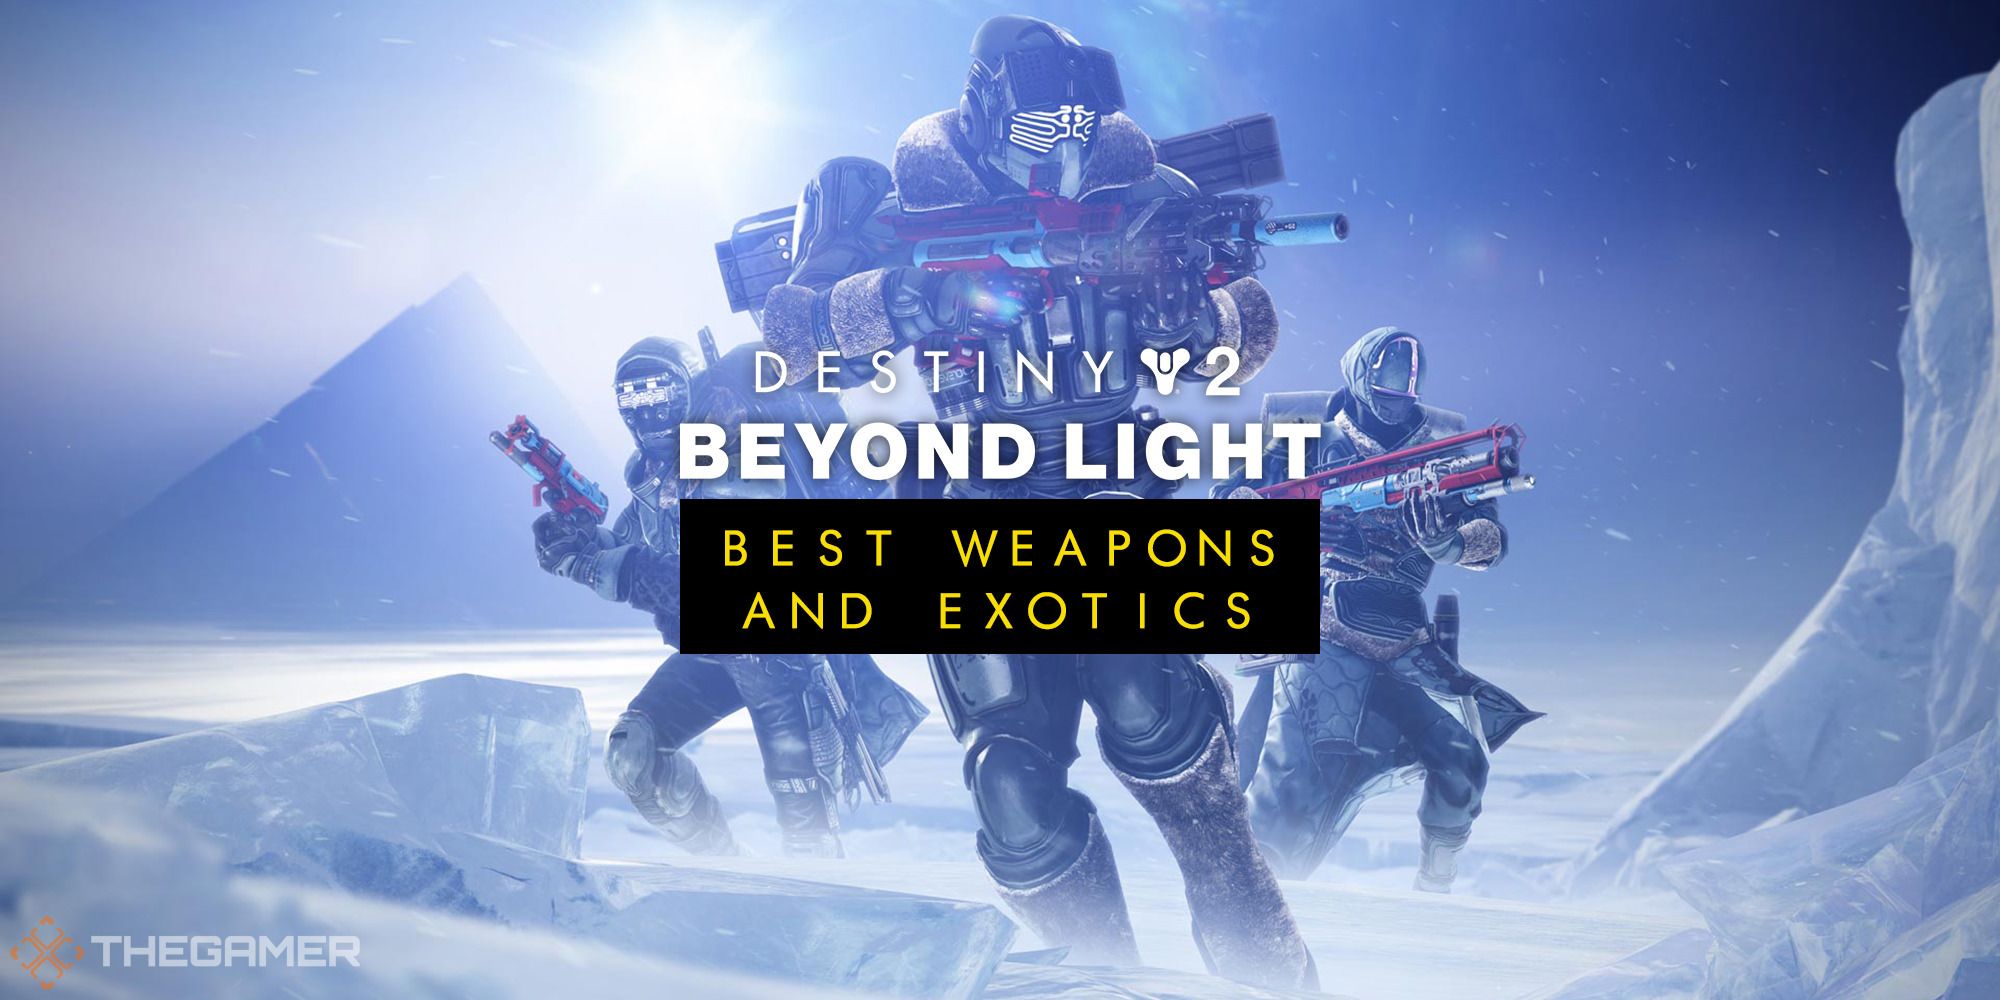 Destiny 2 - Beyond Light Best Weapons And Exotics